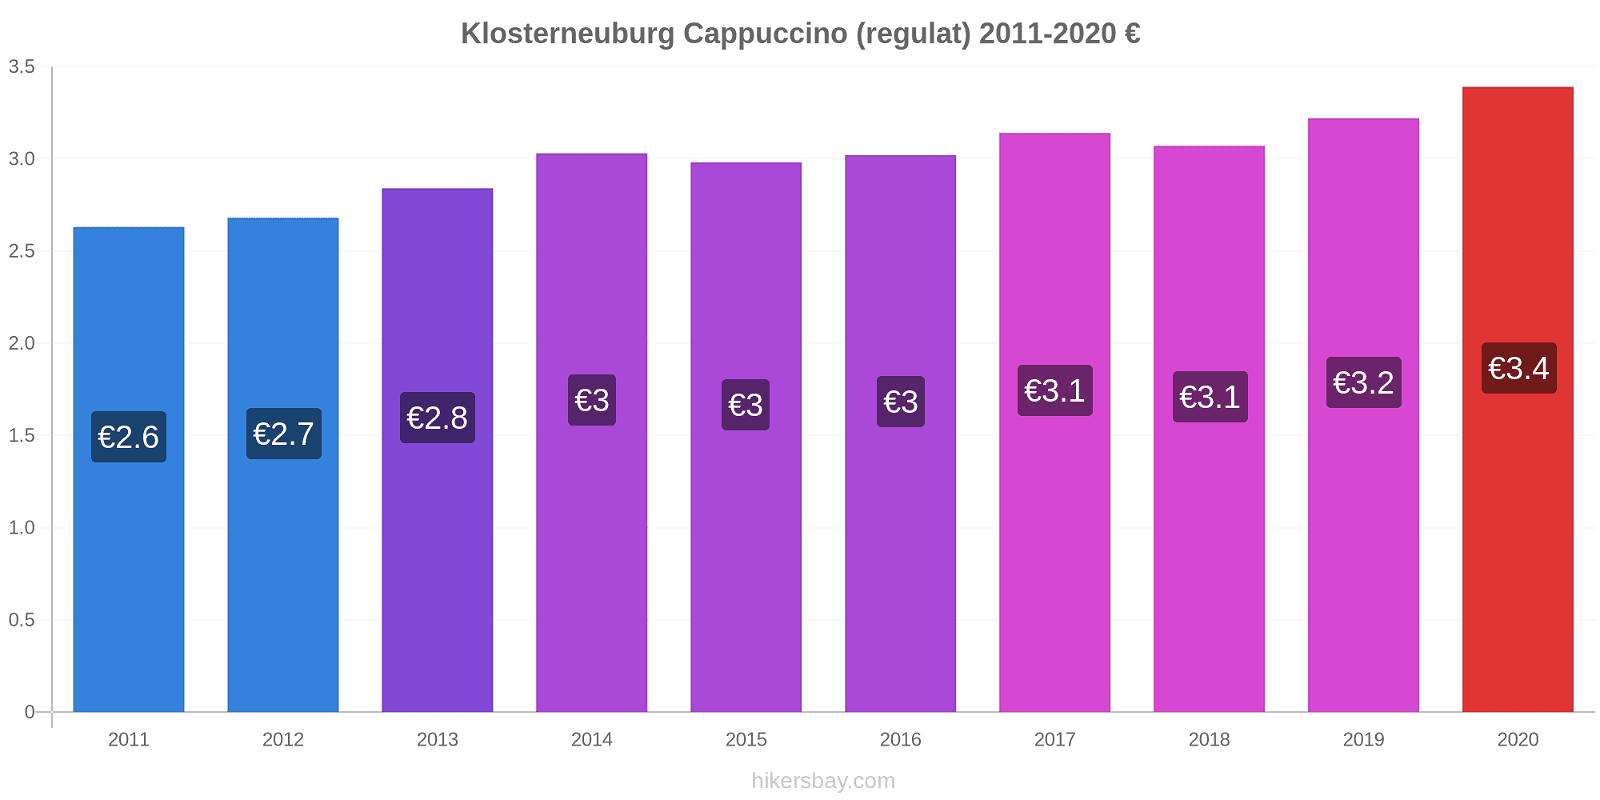 Klosterneuburg modificări de preț Cappuccino (regulat) hikersbay.com